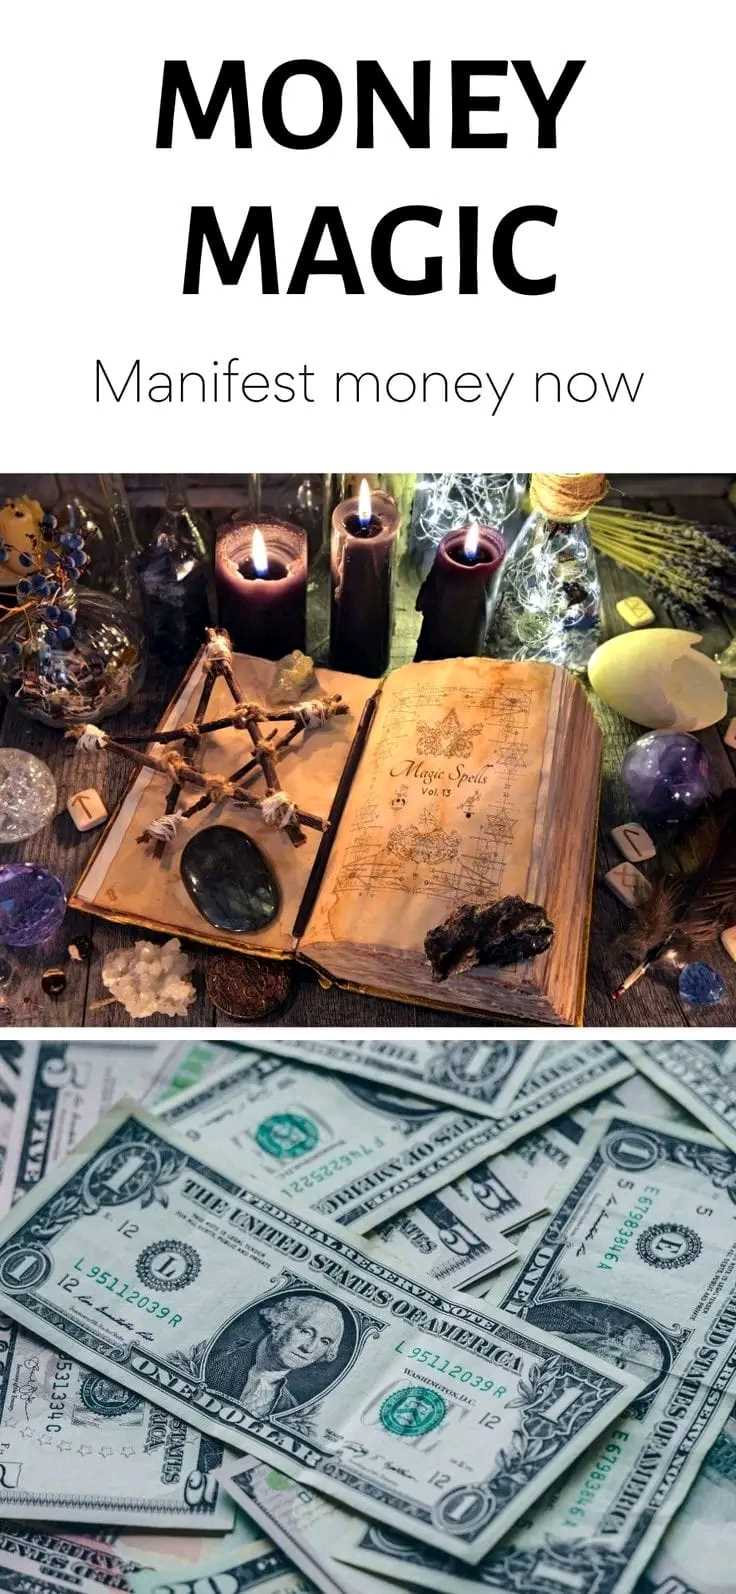 +2349137452984 ★†★How to join occult for money ritual without human sacrifice in Owerri, Edo, Anambra, Lagos, Asaba, Portharcourt, Abia, Benin, Delta, and across Nigeria 